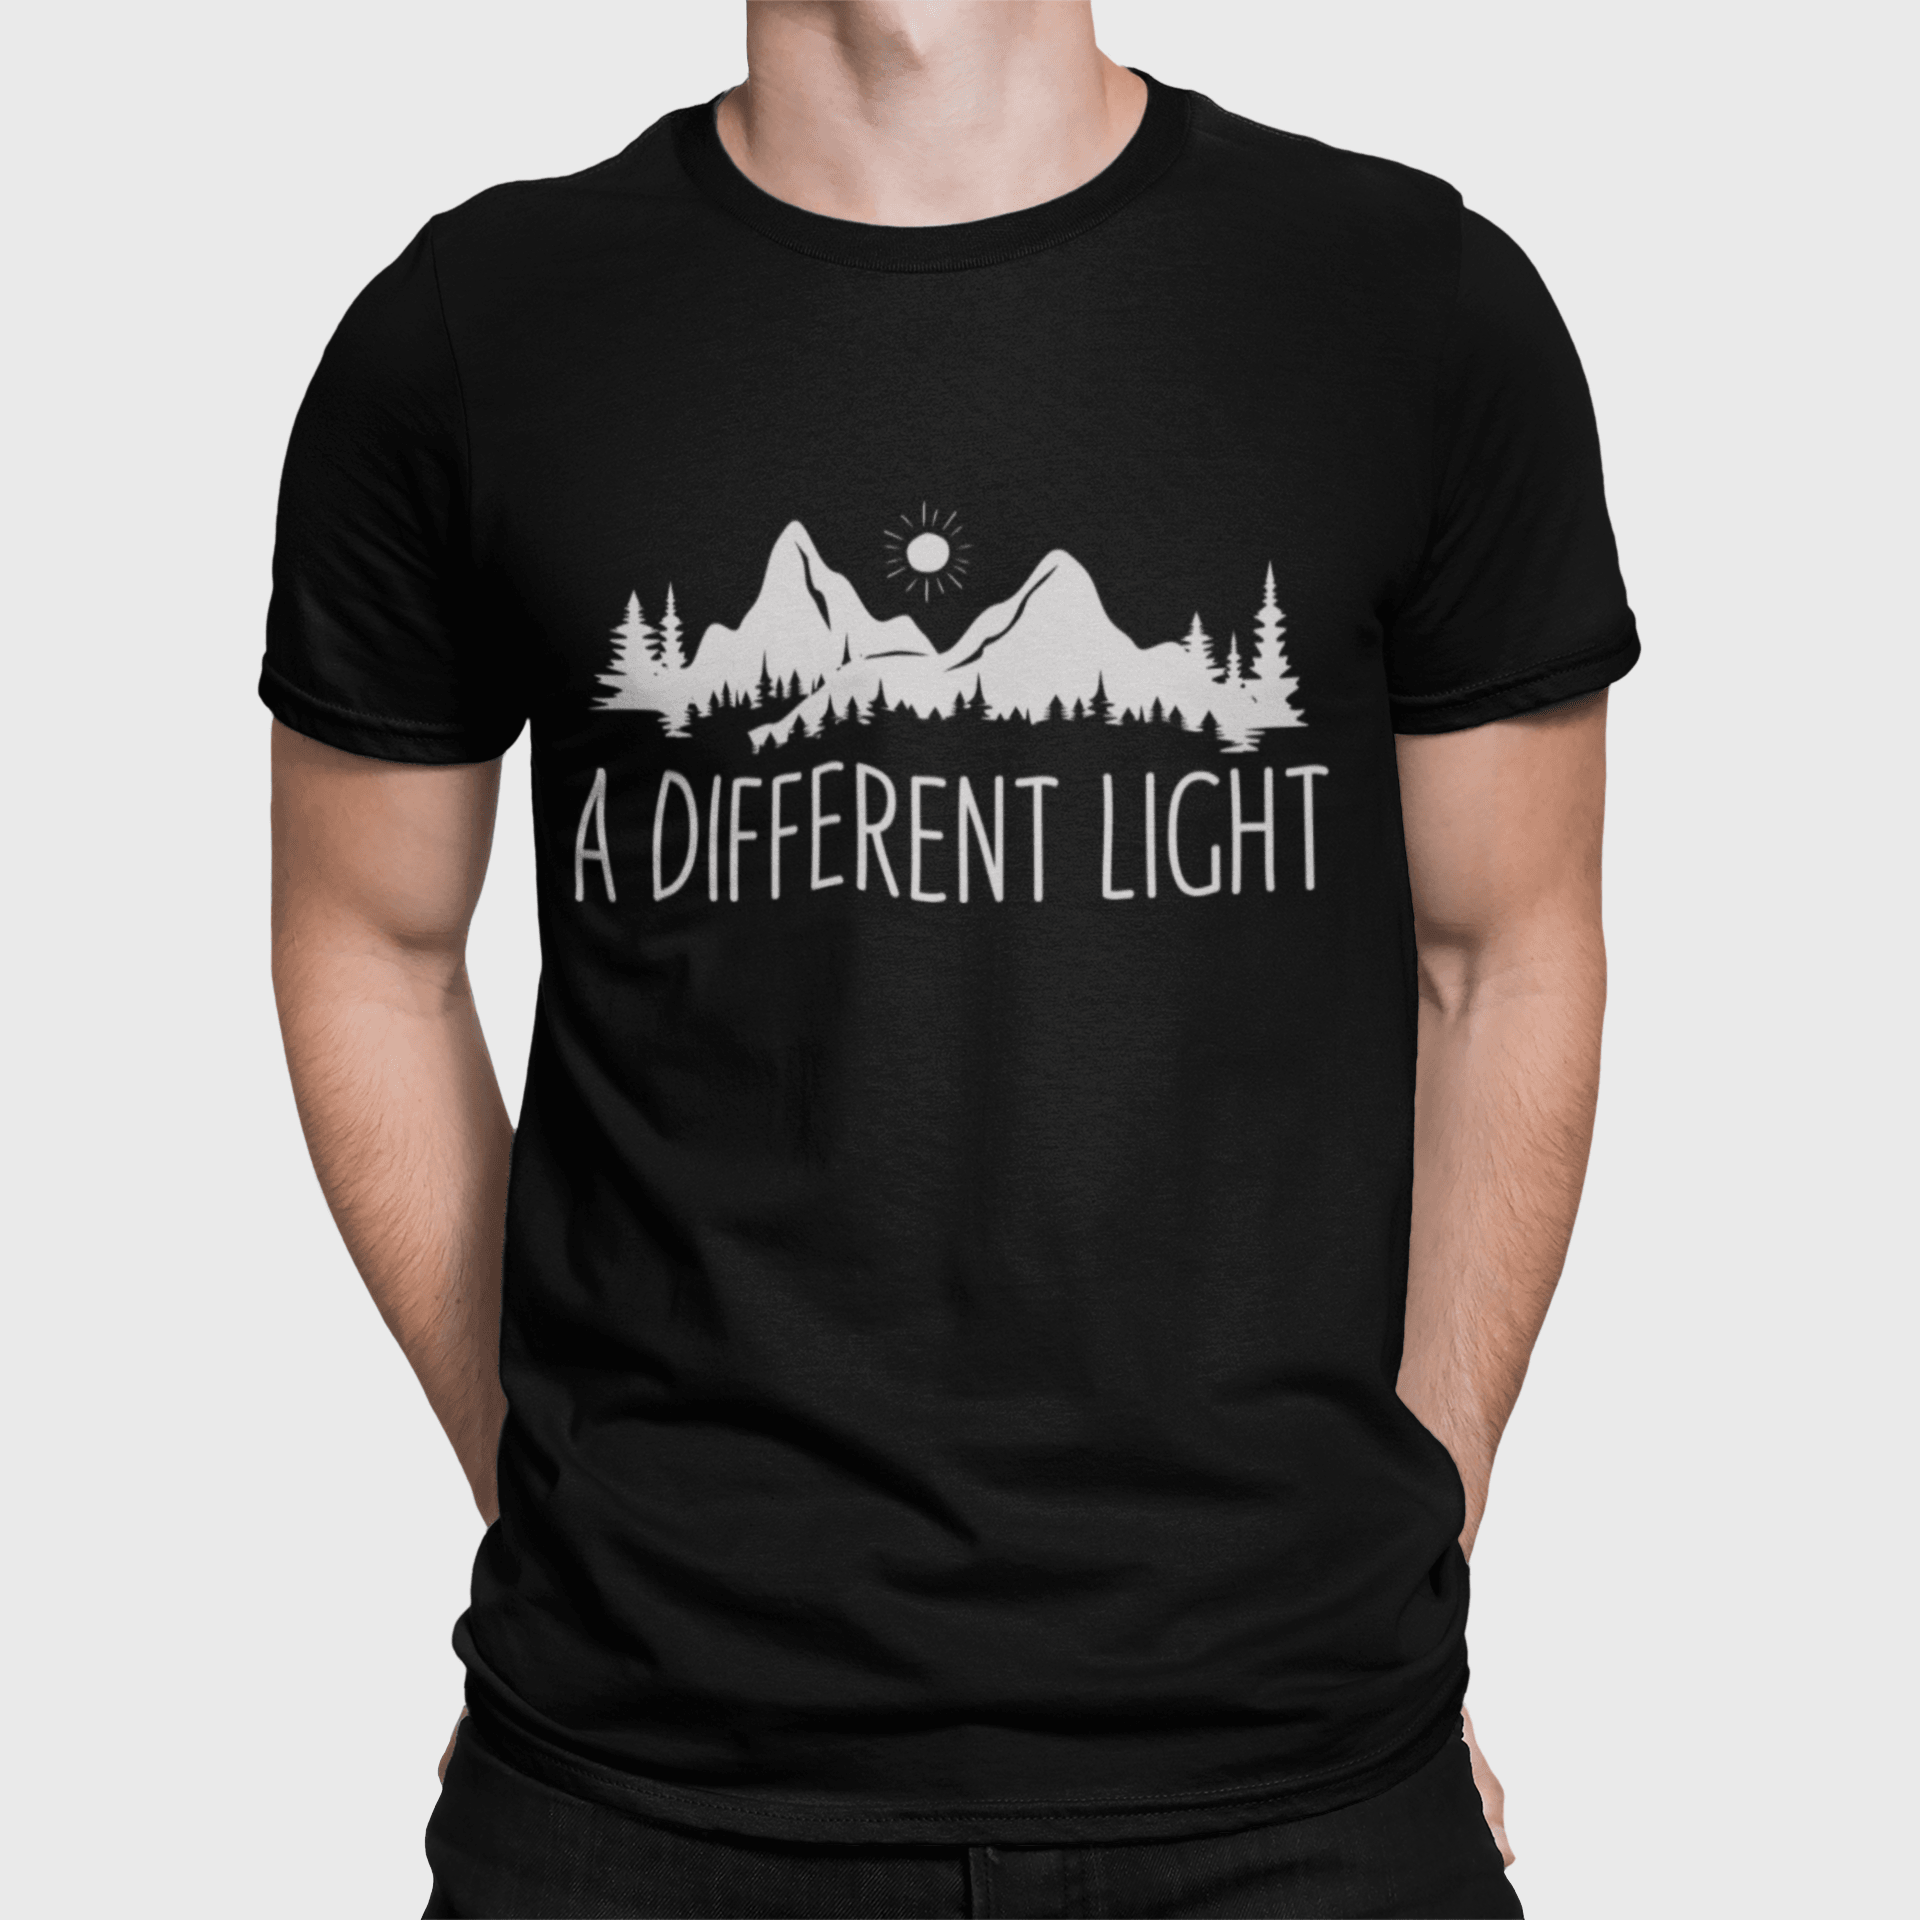 A Different Light Black T-Shirt For Men - ATOM